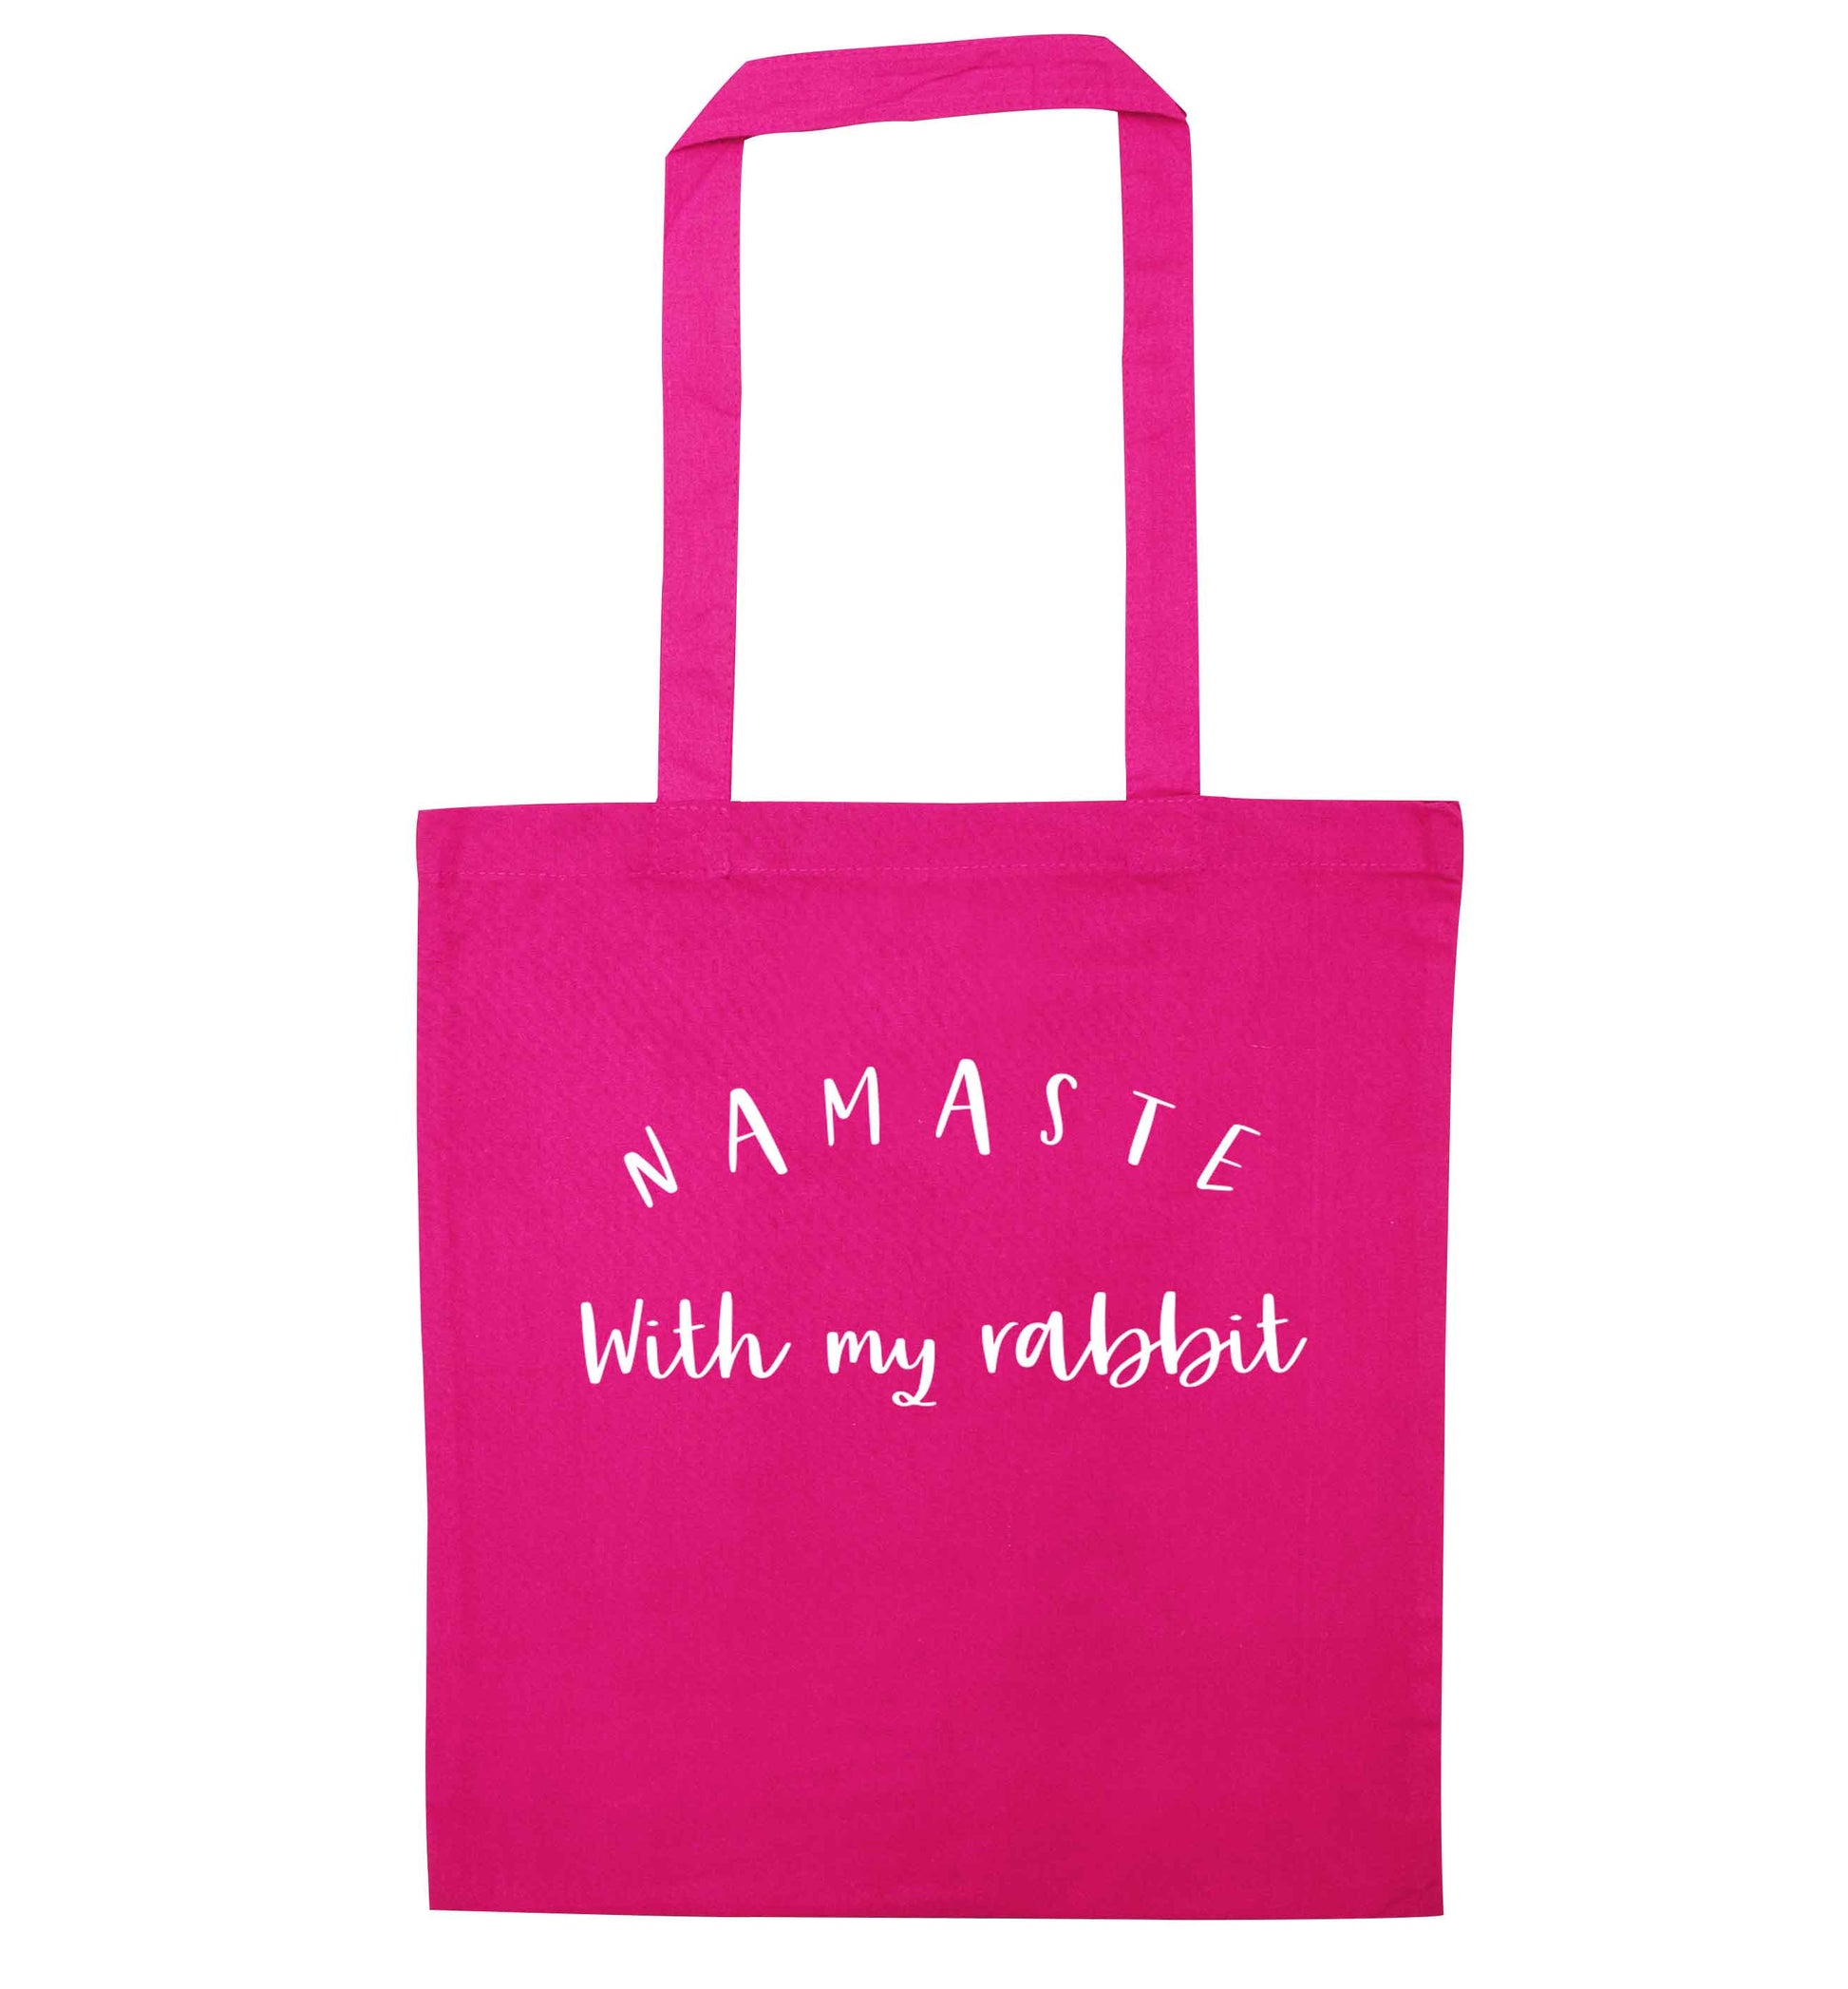 Namaste with my rabbit pink tote bag